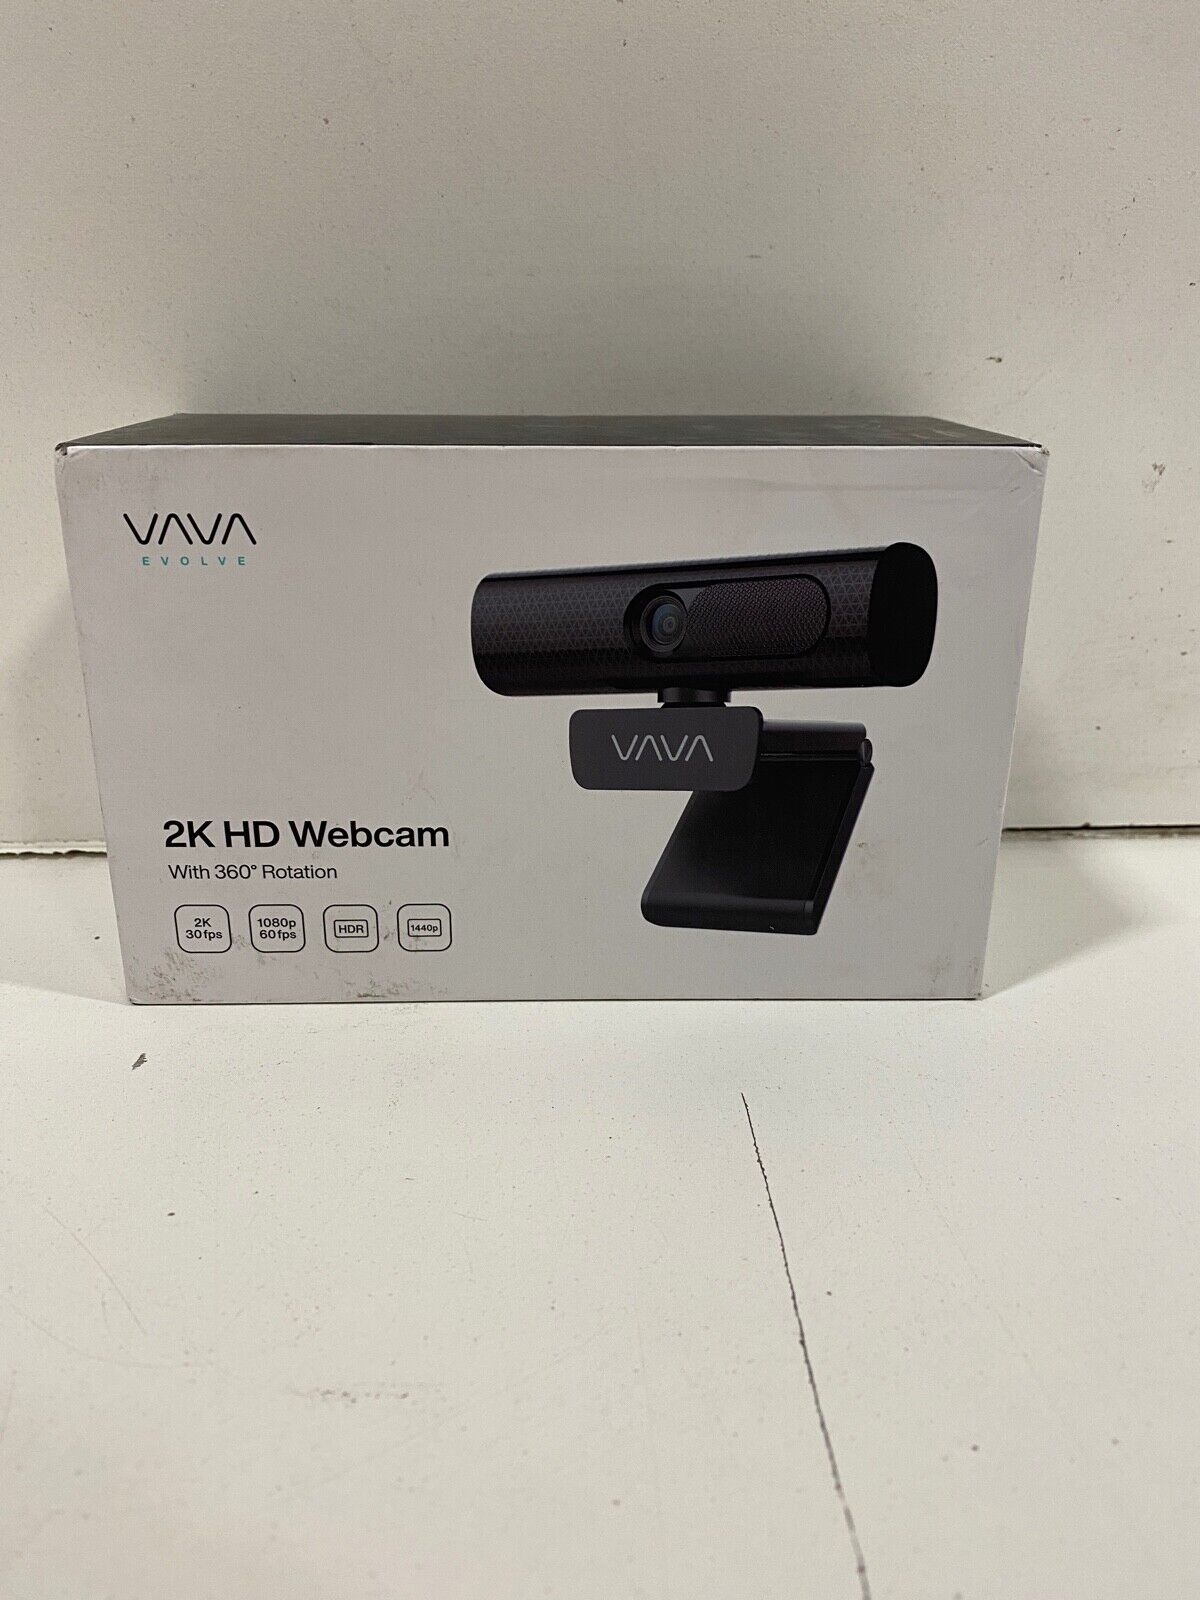 VAVA Evolve 2K HD Web Camera with Dual Microphones, Autofocus